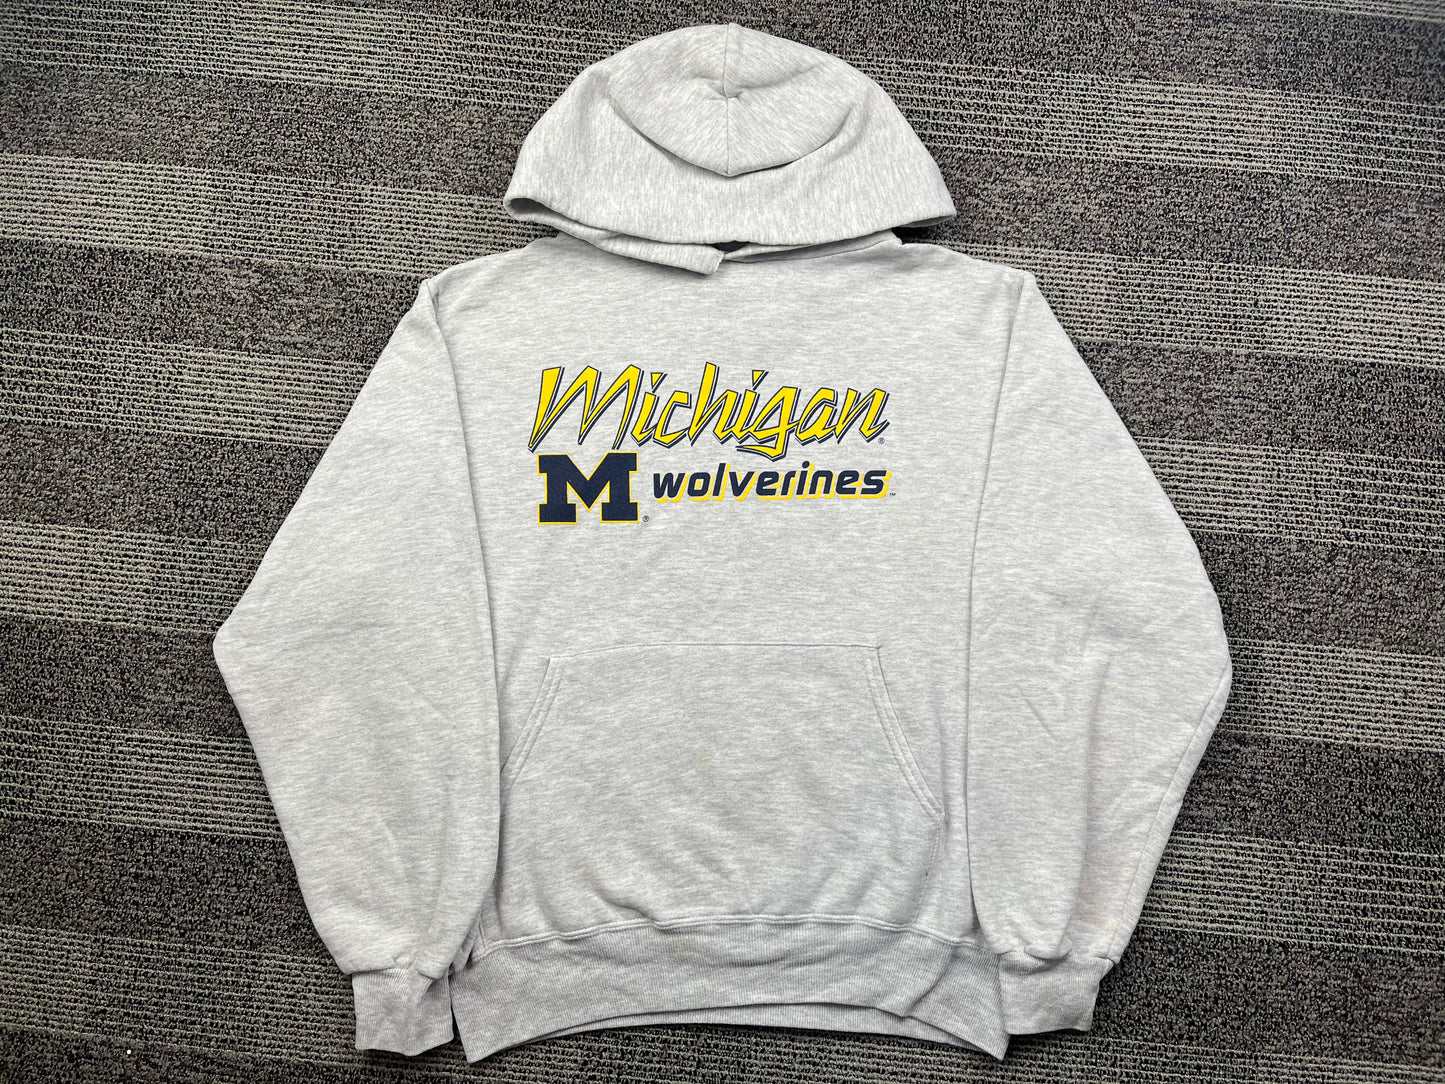 Michigan Wolverines Sweatshirt